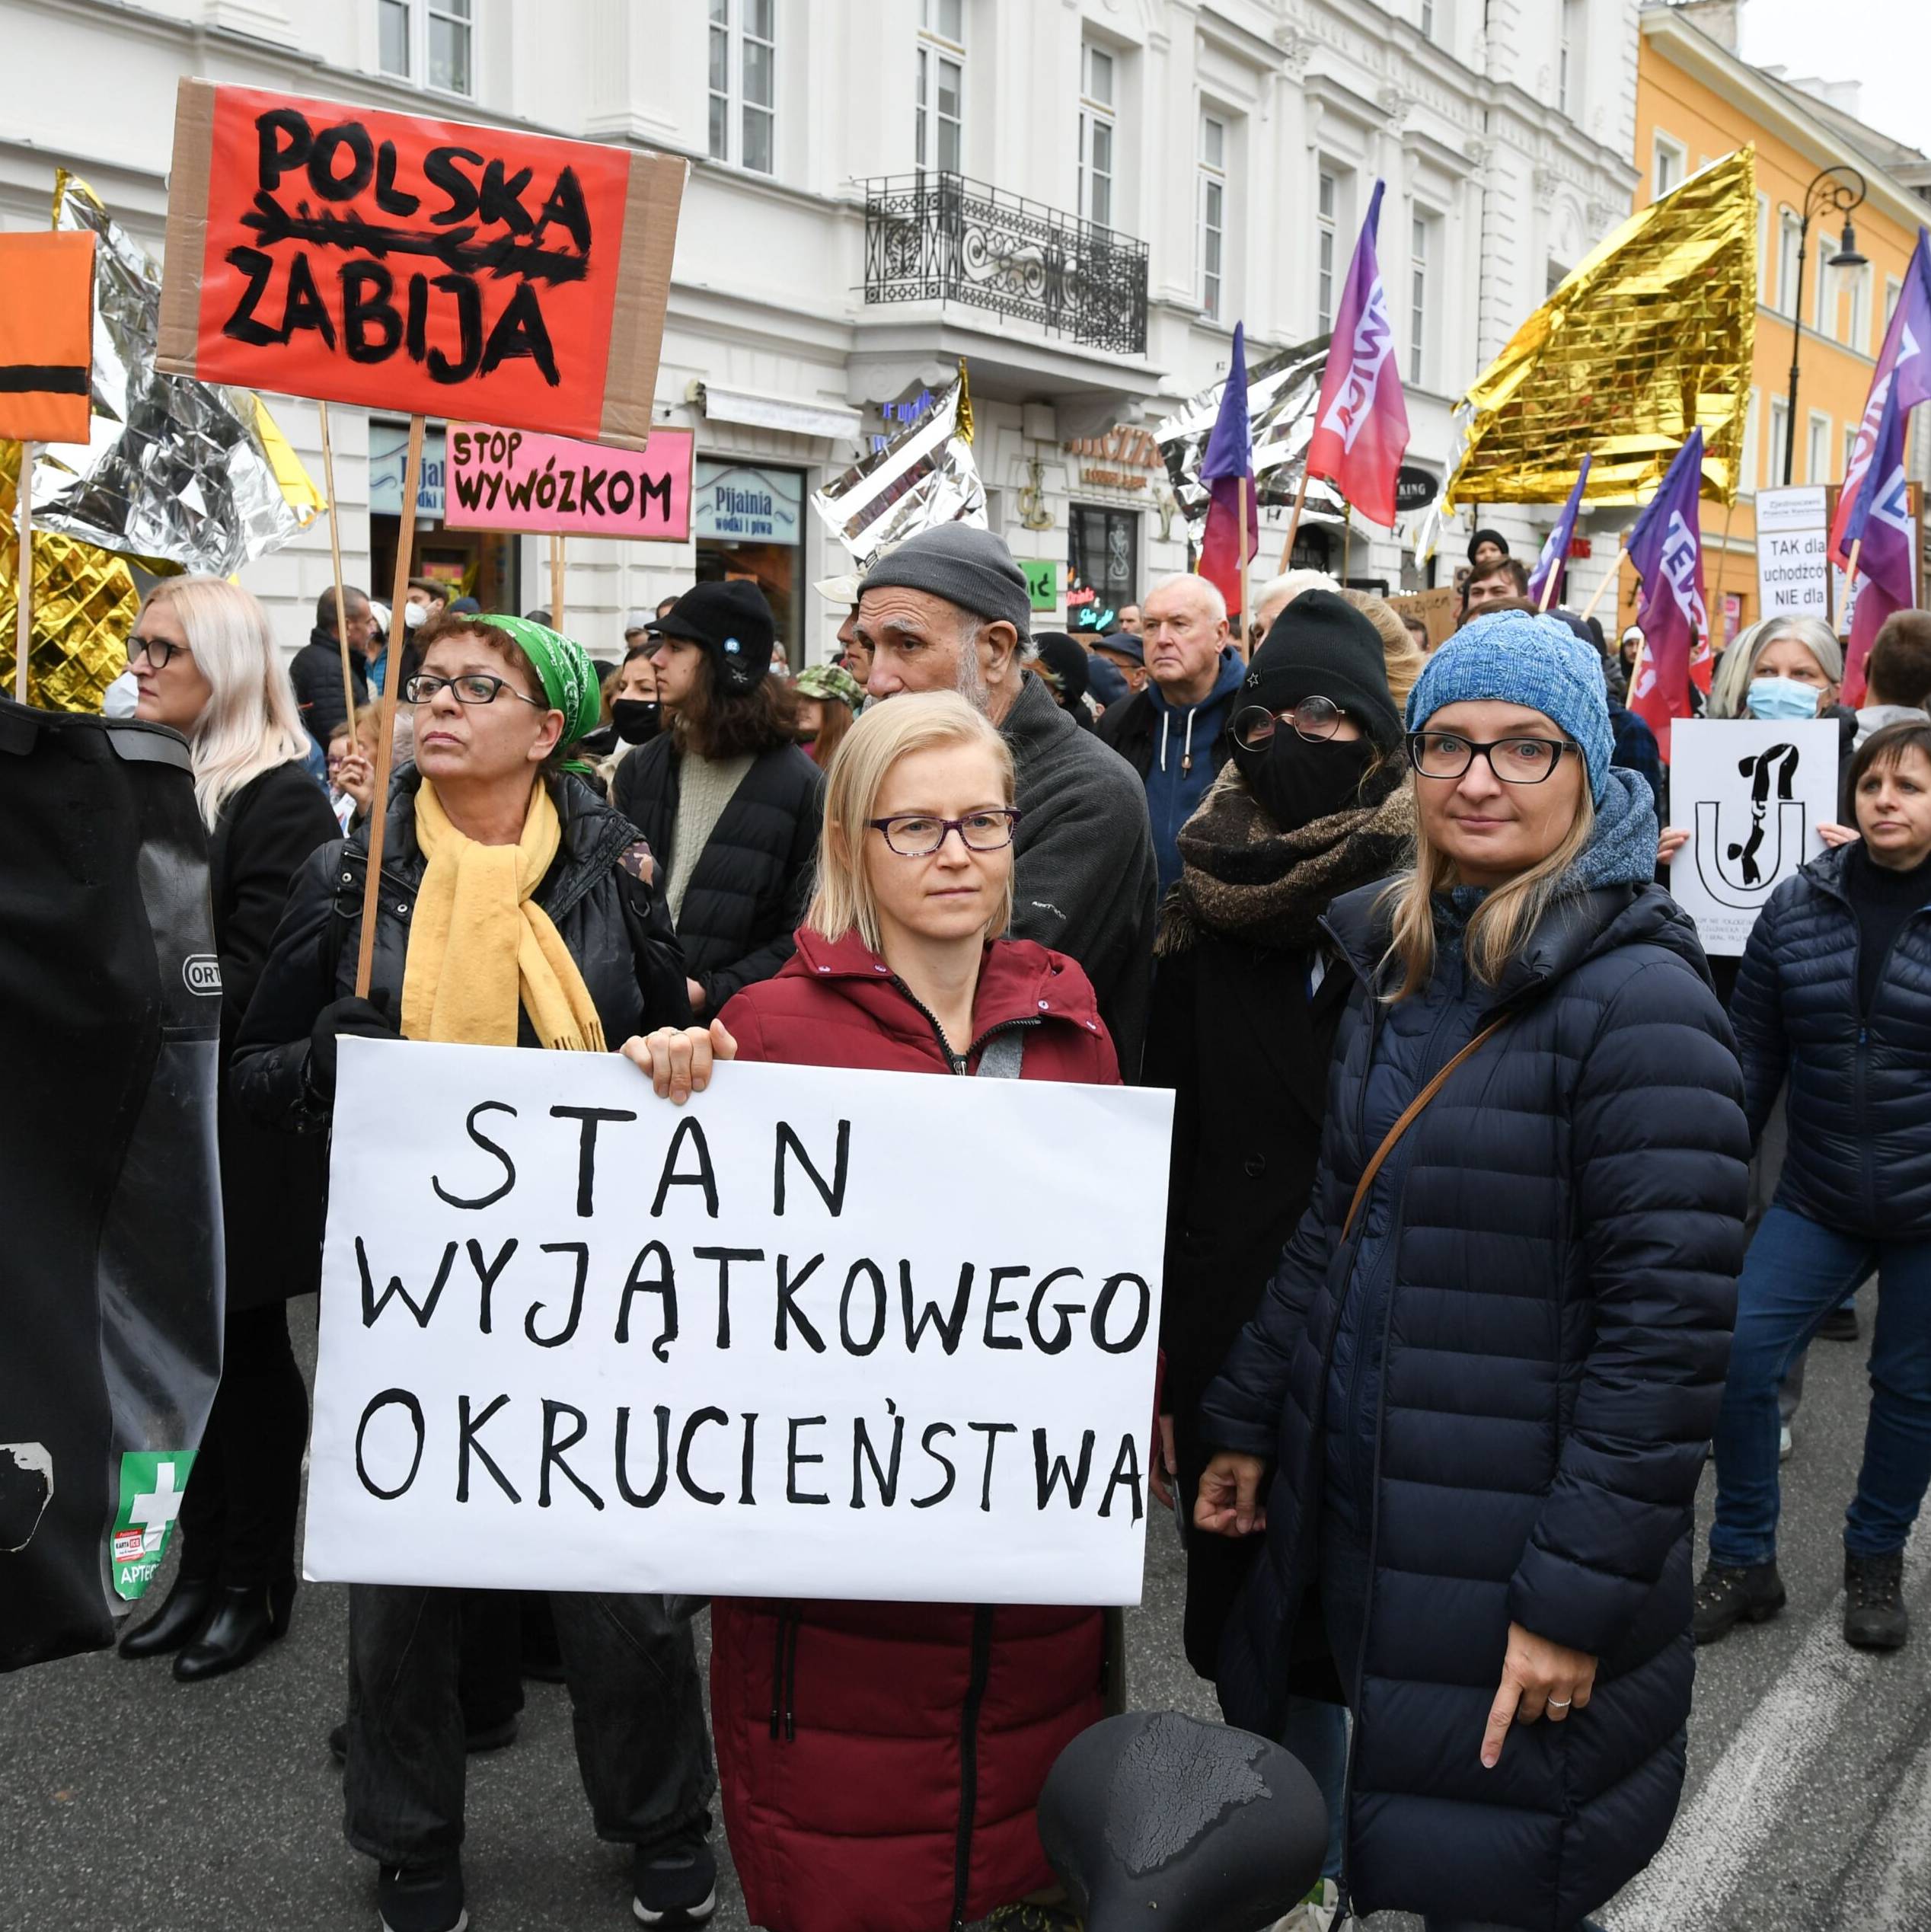 Warszawa, 17.10.2021. Stop torturom na granicy – demonstracja